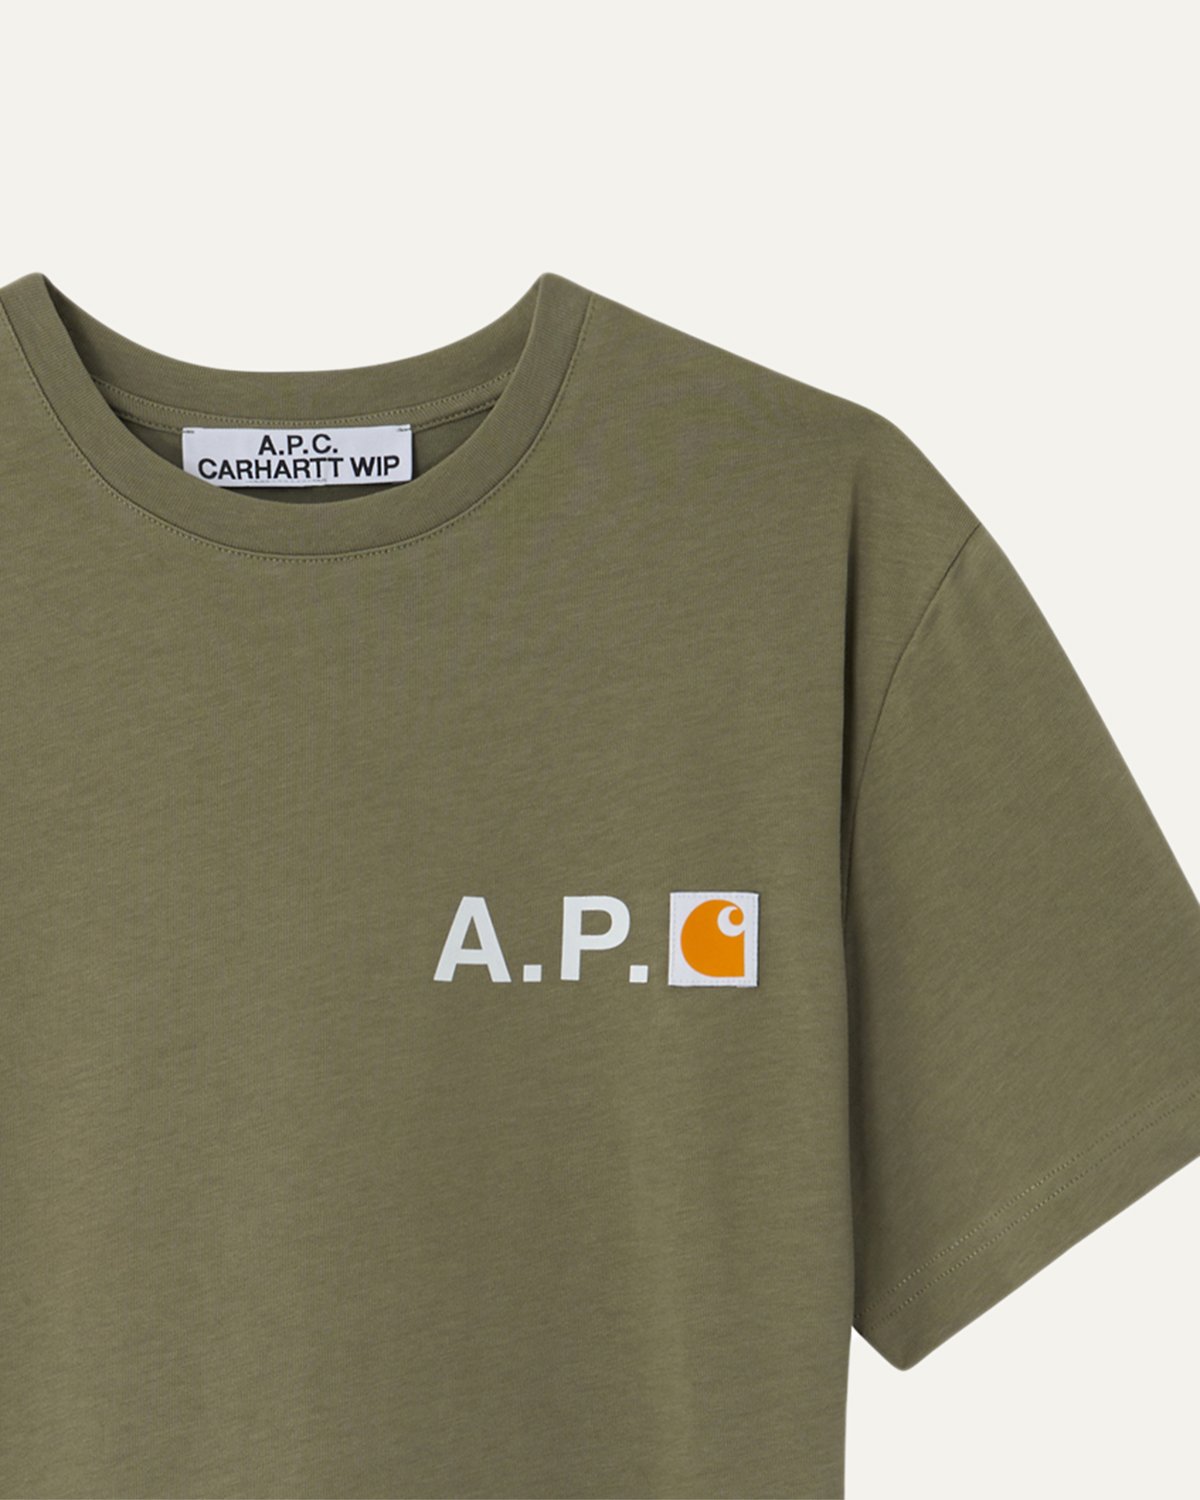 A.P.C. x Carhartt WIP - Fire T-Shirt Khaki - Tops - Green - Image 3